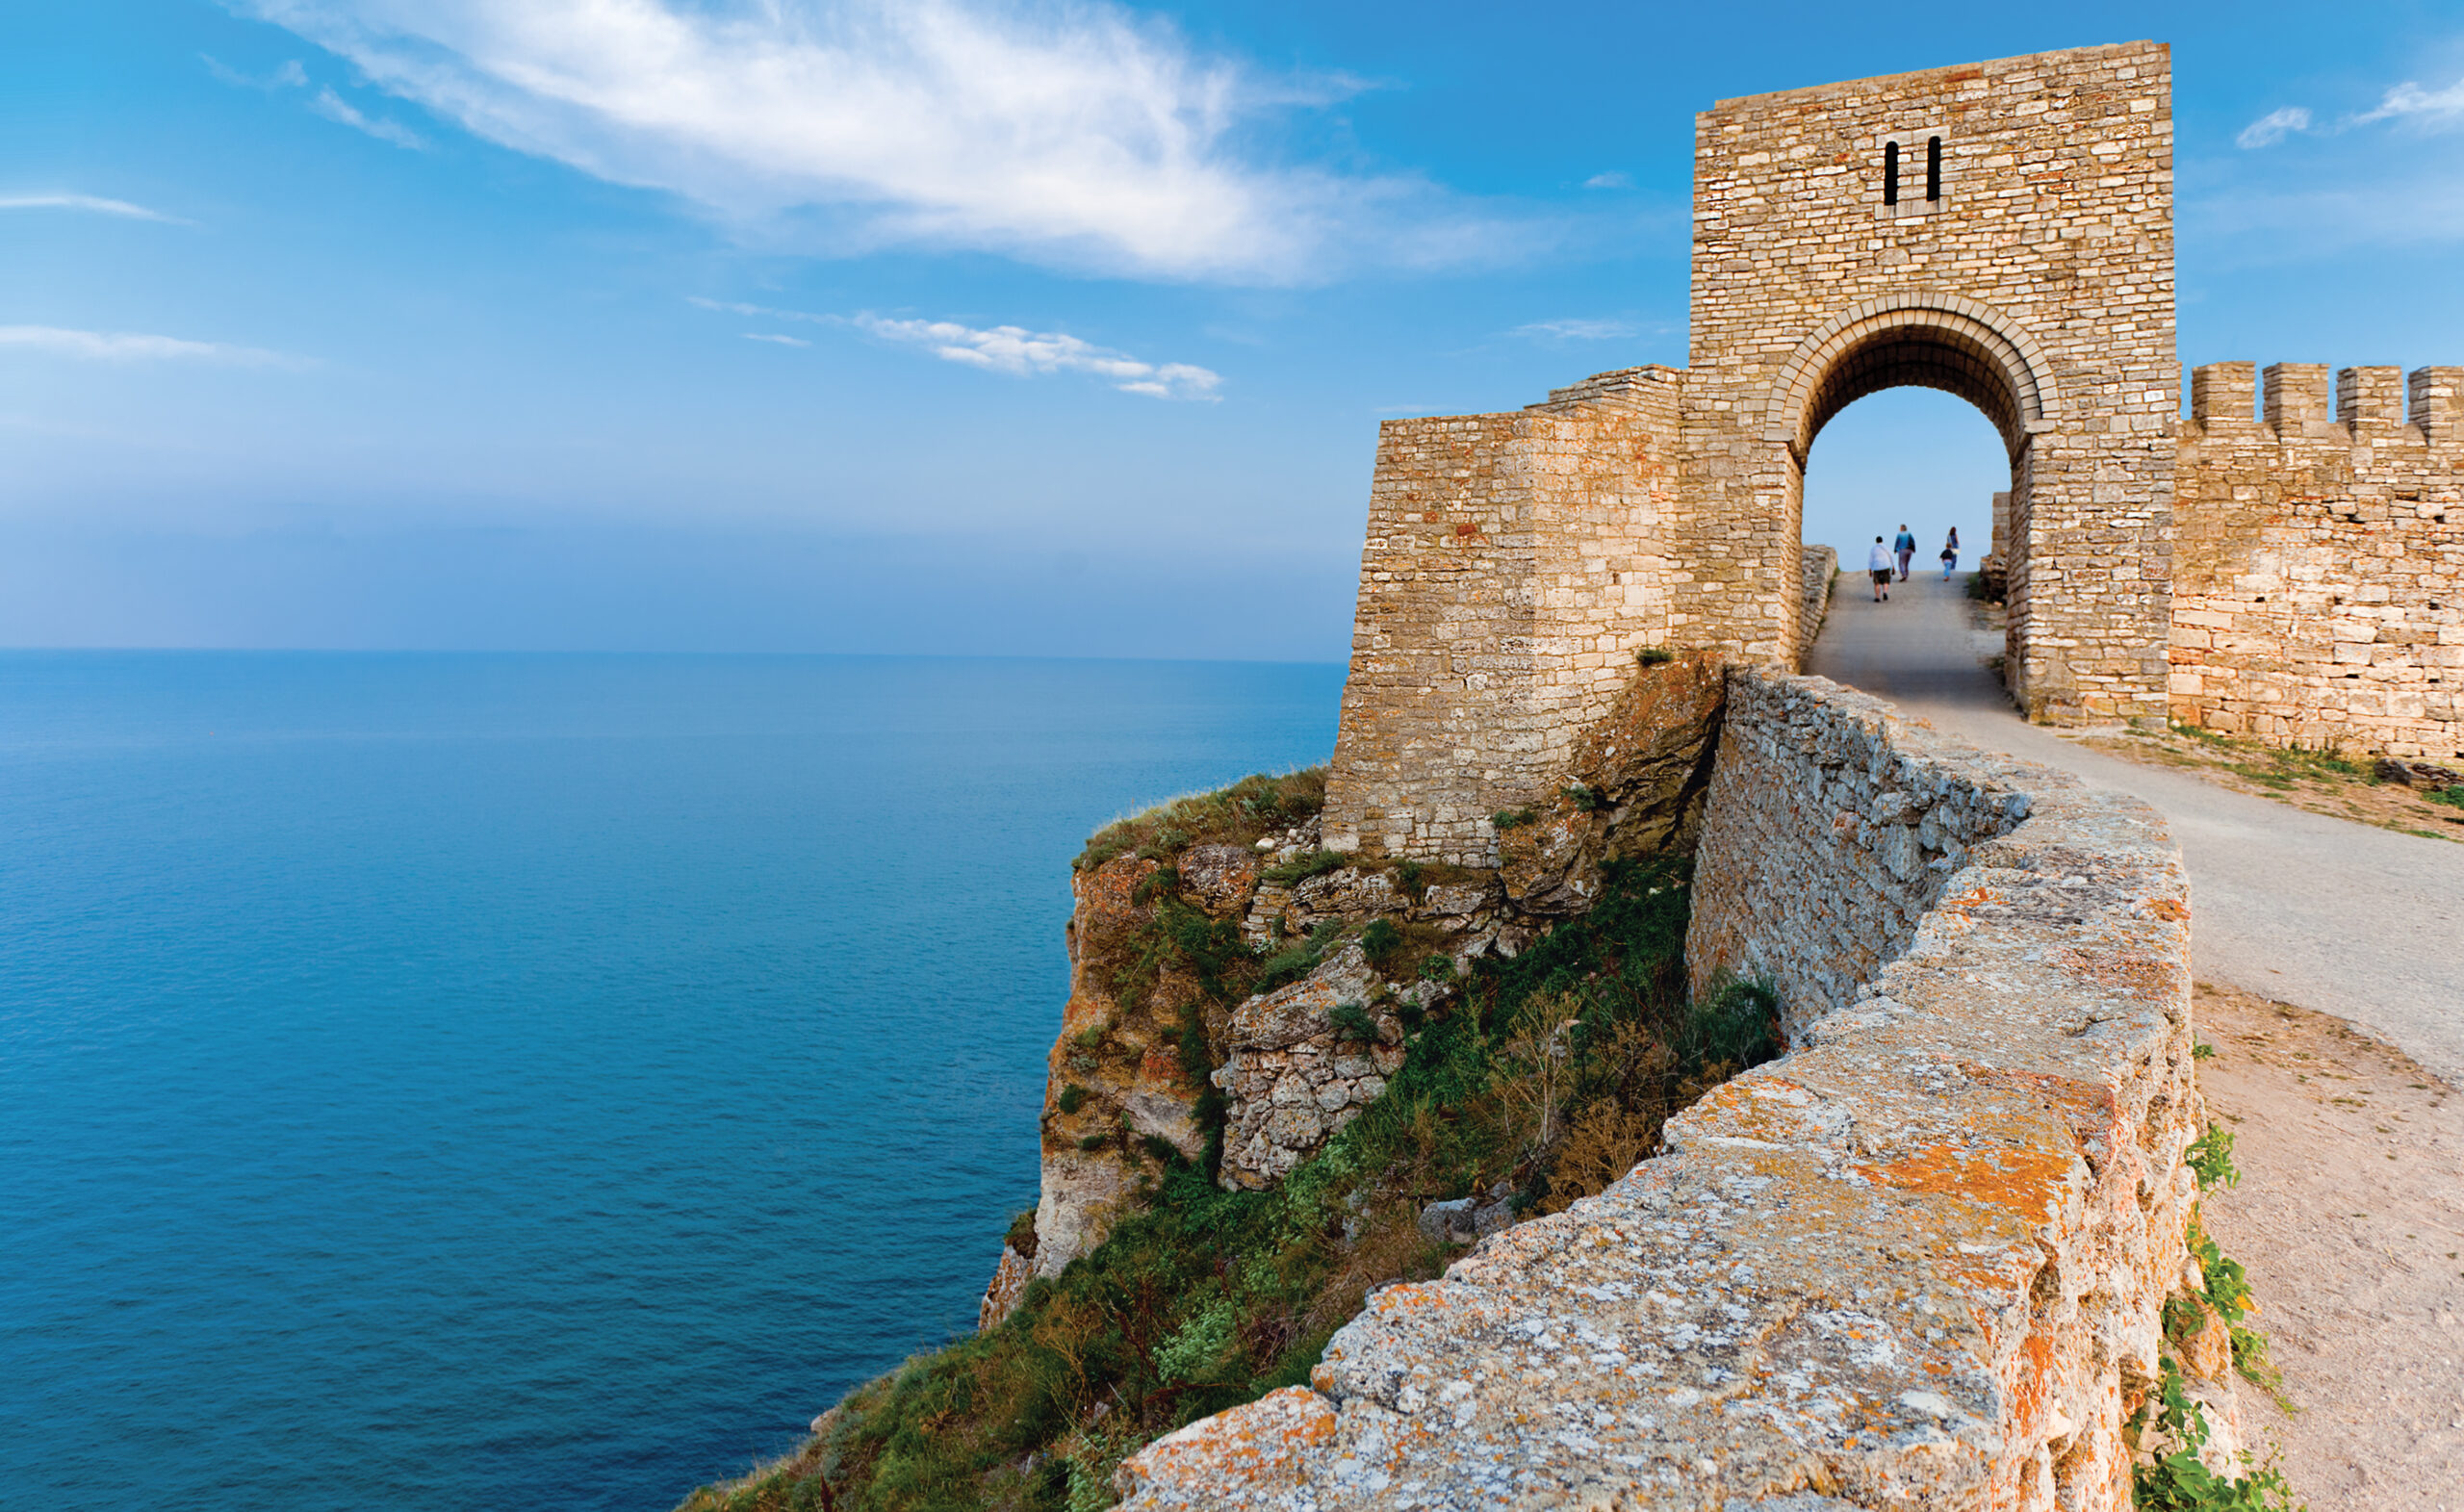 Ancient stone fortress at Bulgarian Black Sea Coast with walkway.